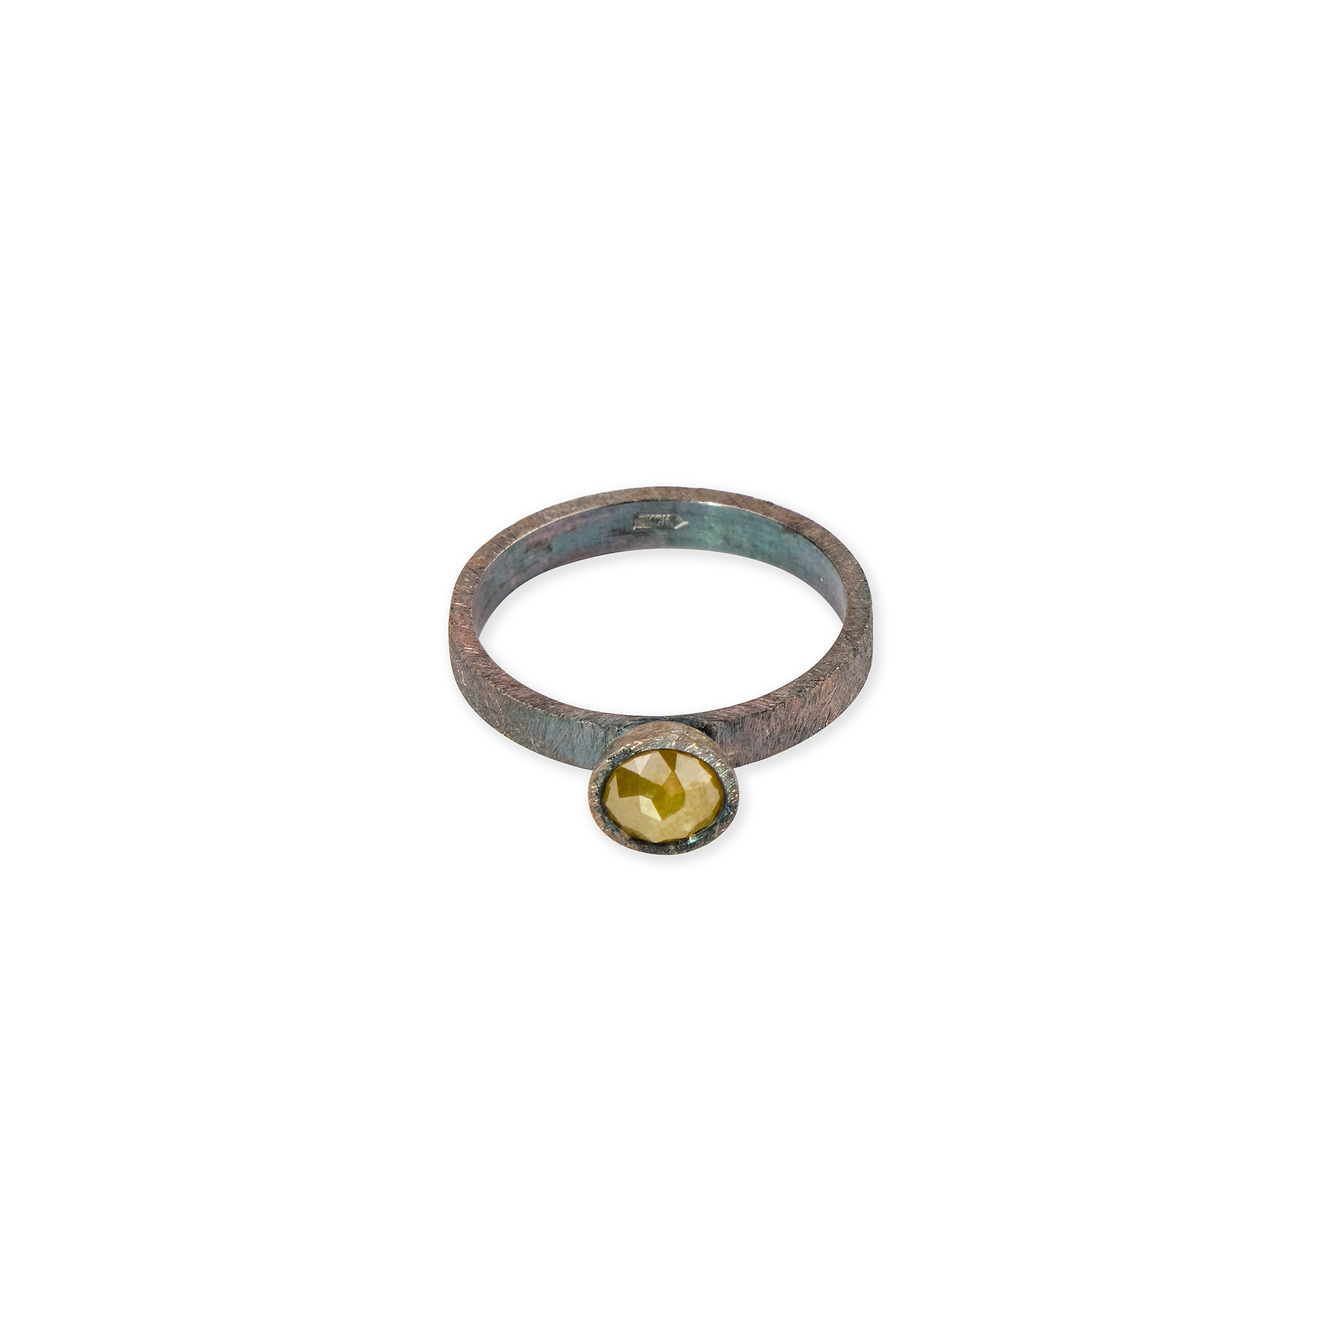 Kintsugi Jewelry Кольцо Fragile rose из серебра с бриллиантом